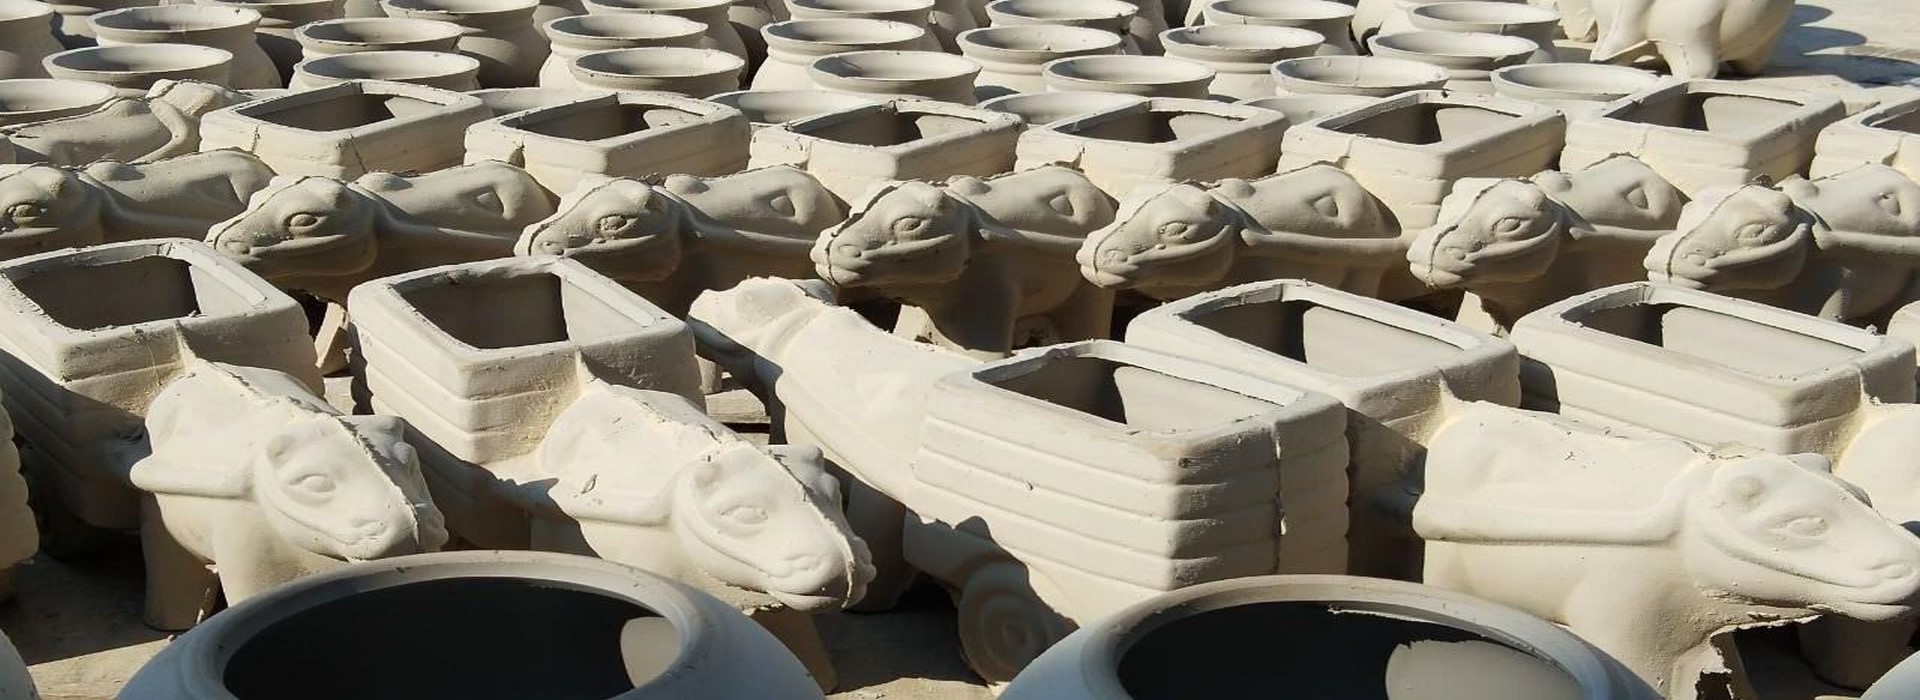 ceramics pots manufacturer in khurja 